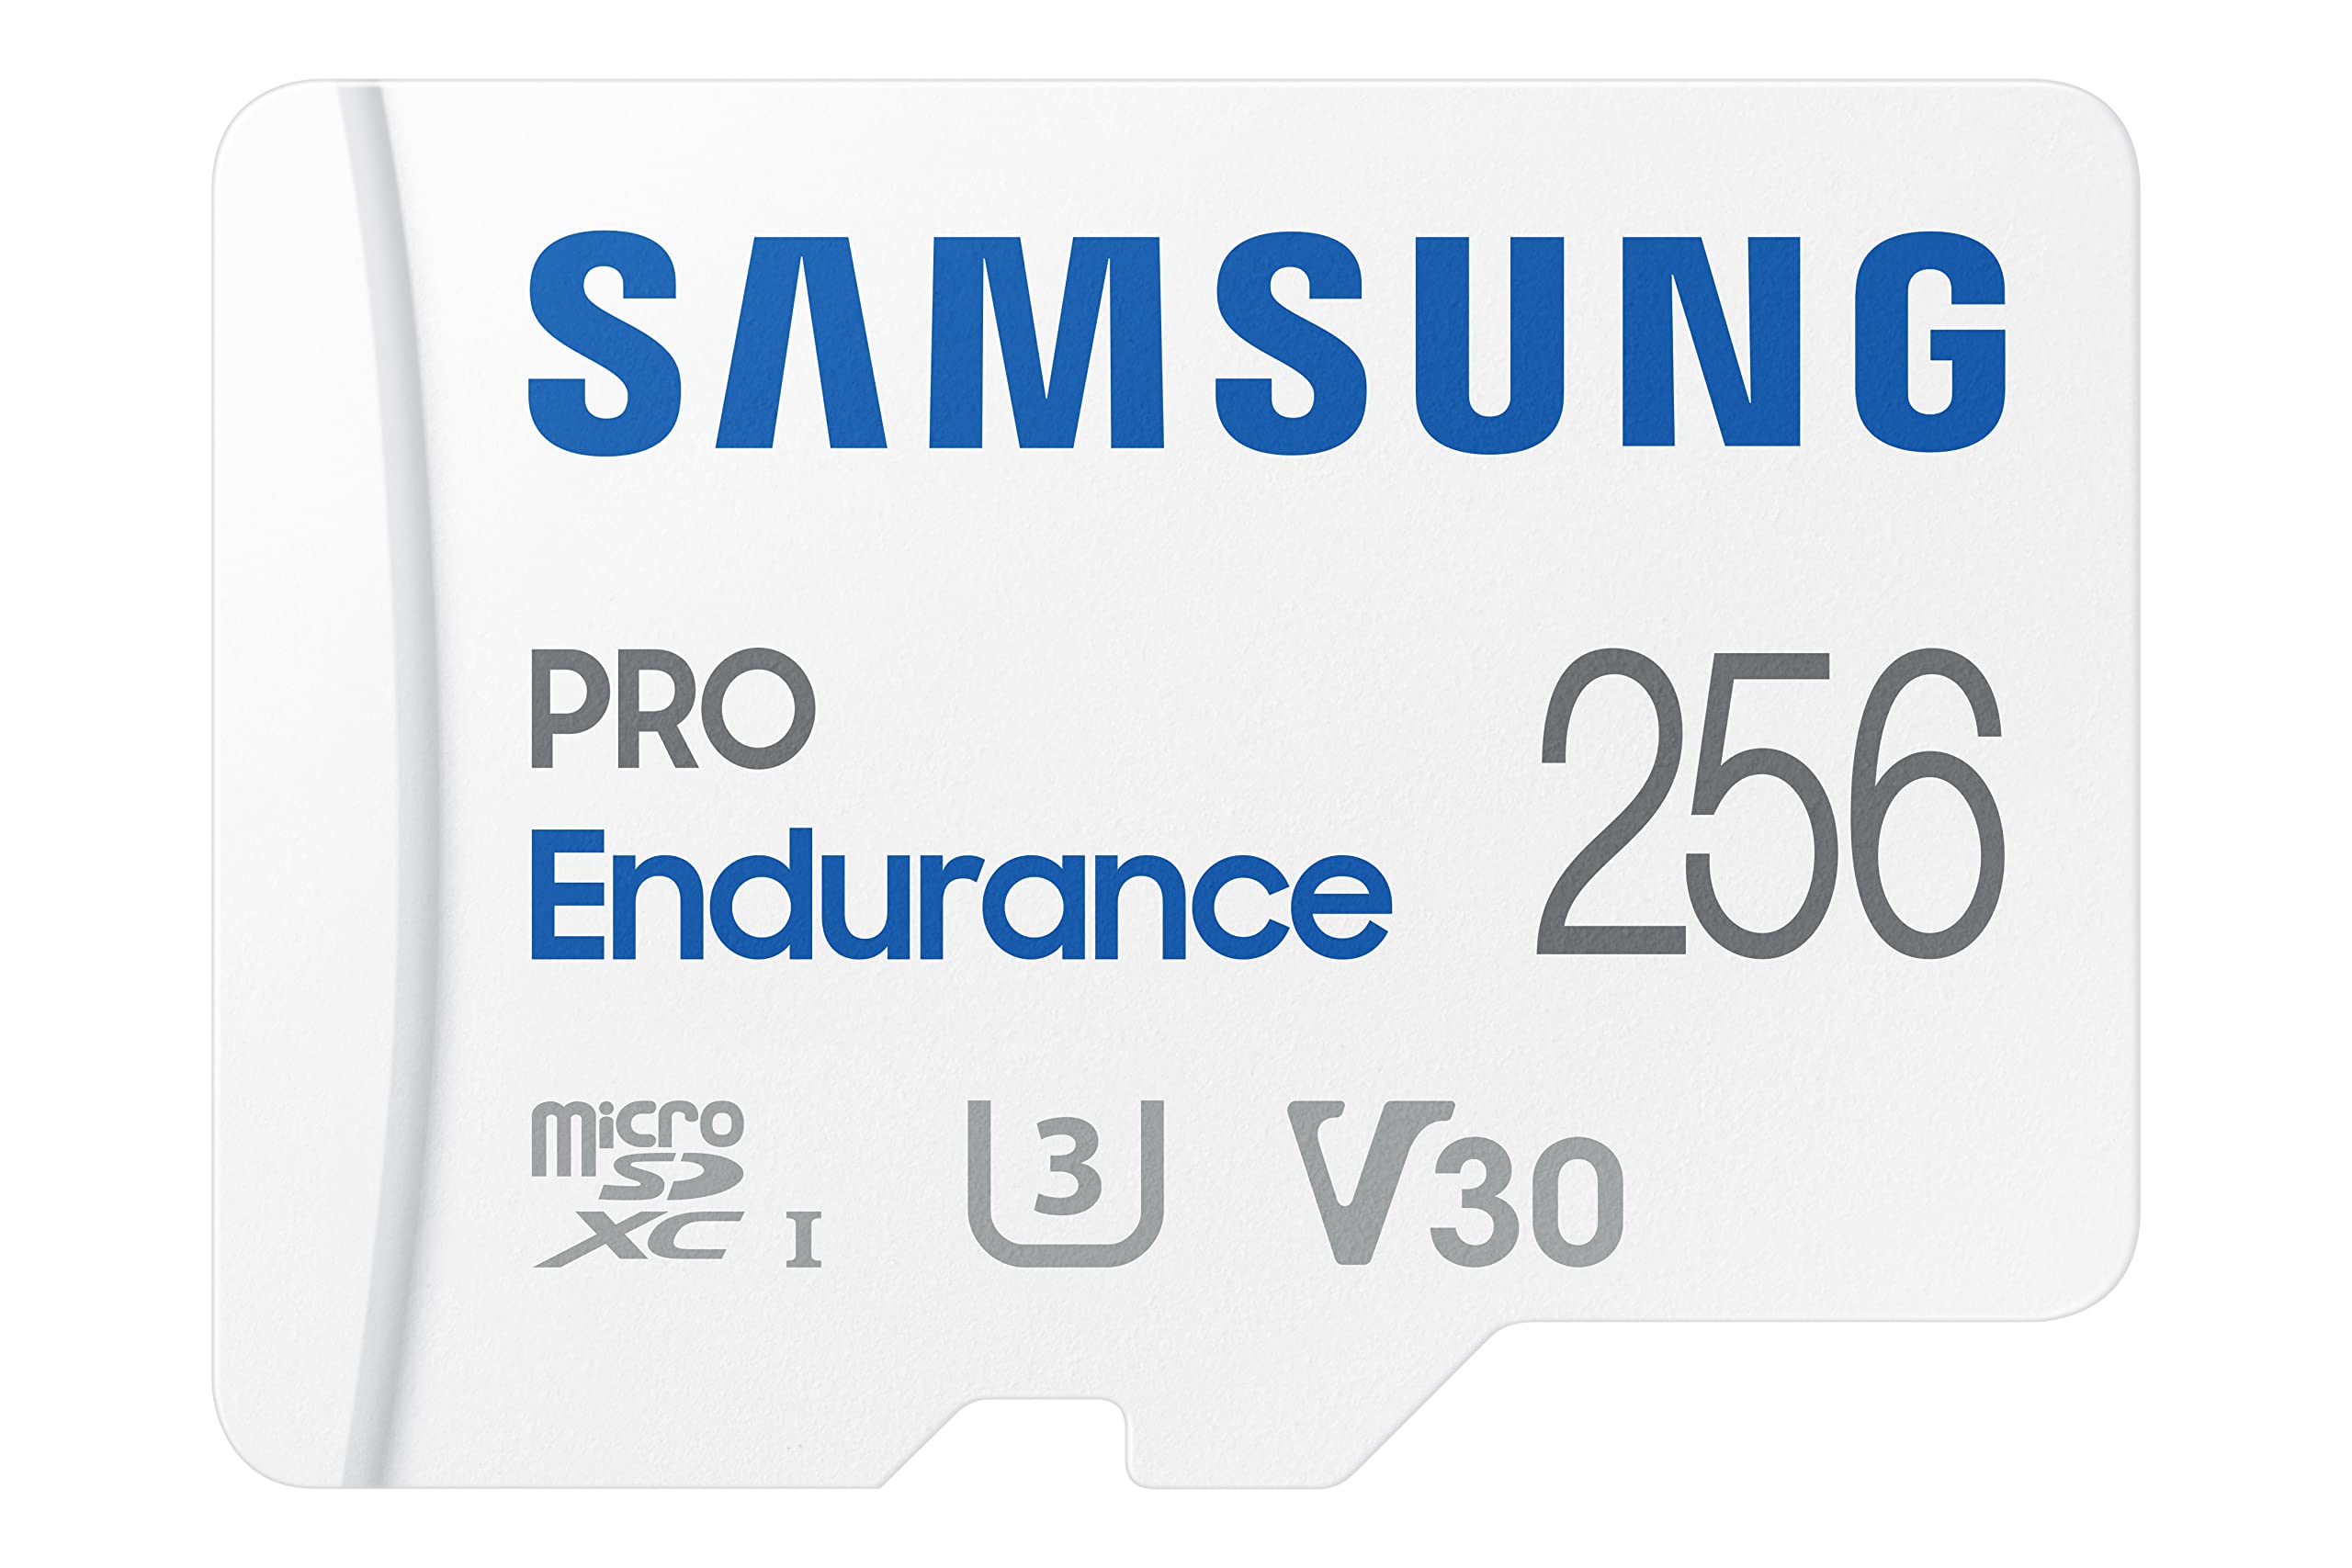 $19.99: 256GB Samsung PRO Endurance UHS-I microSDXC Memory Card w/ SD Adapter